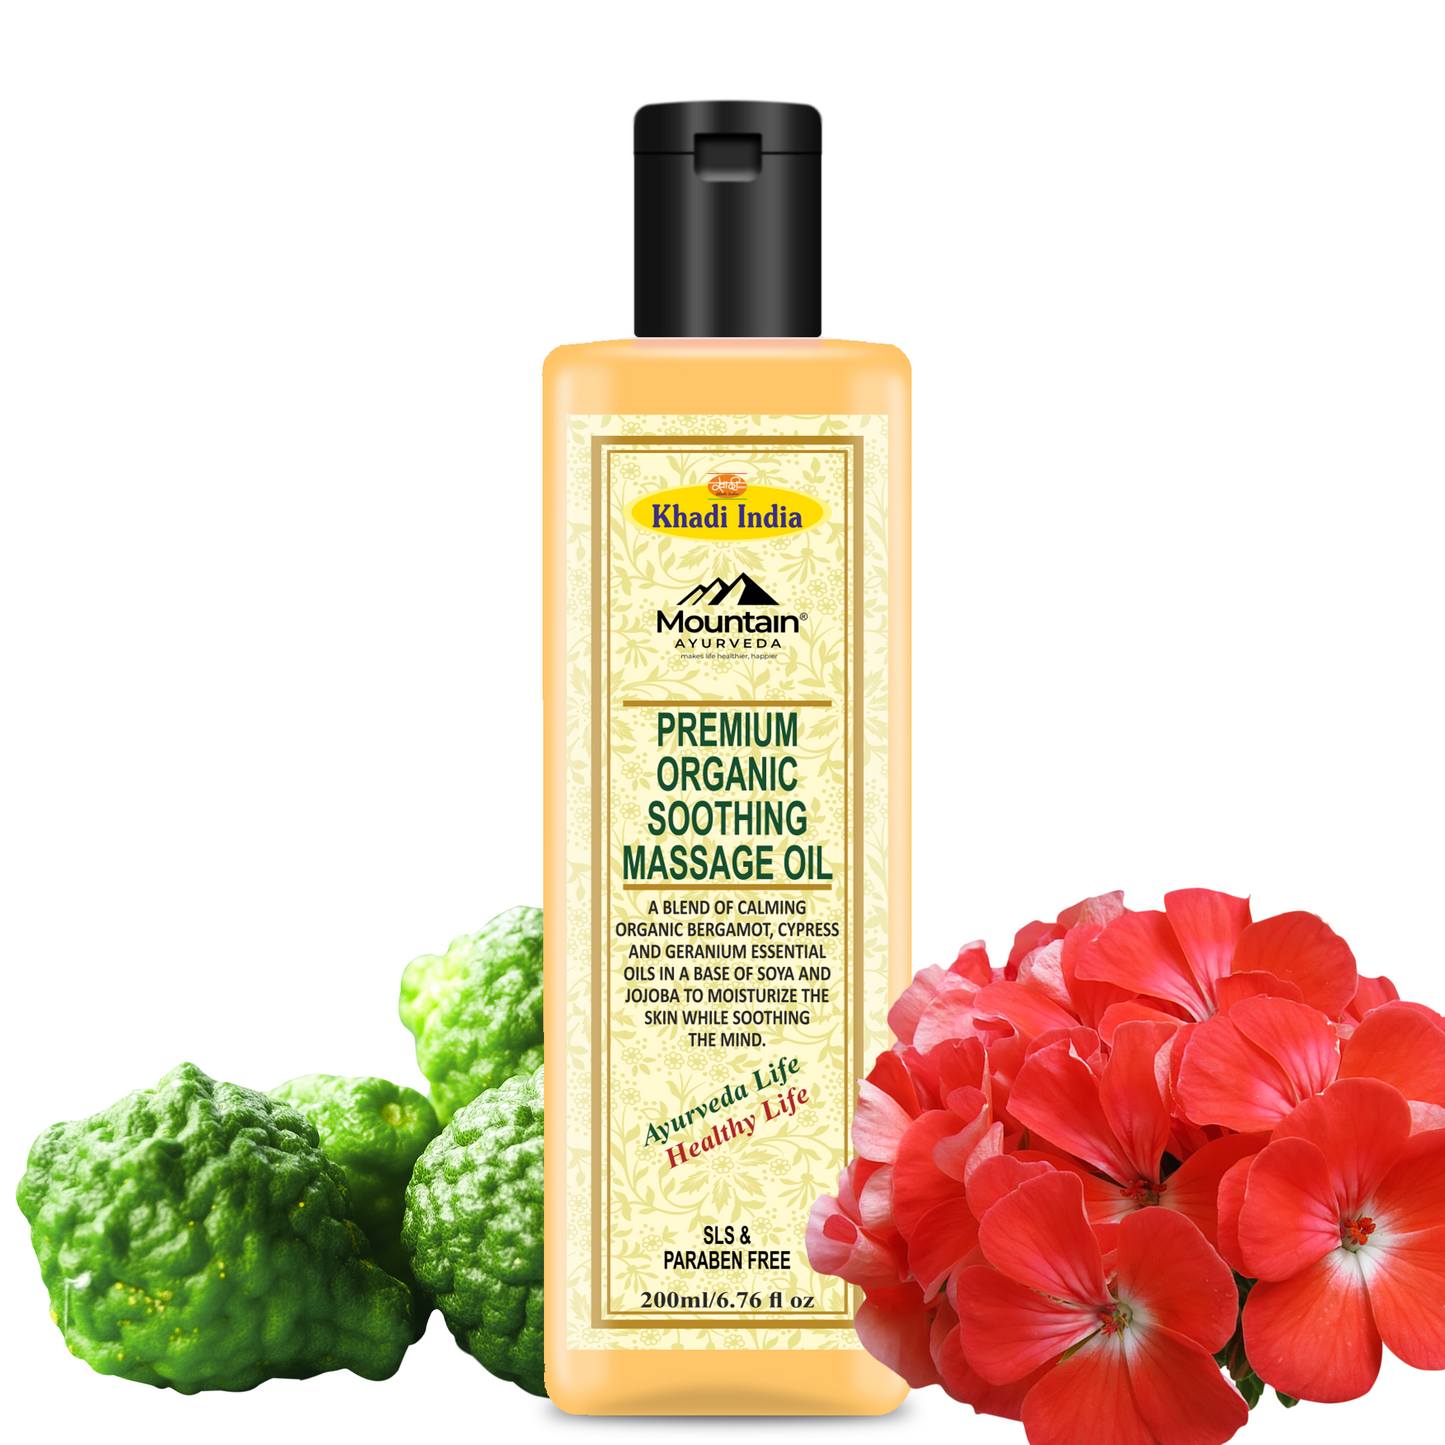 Janakshahi Premium Organic Massage Oil 210 ml